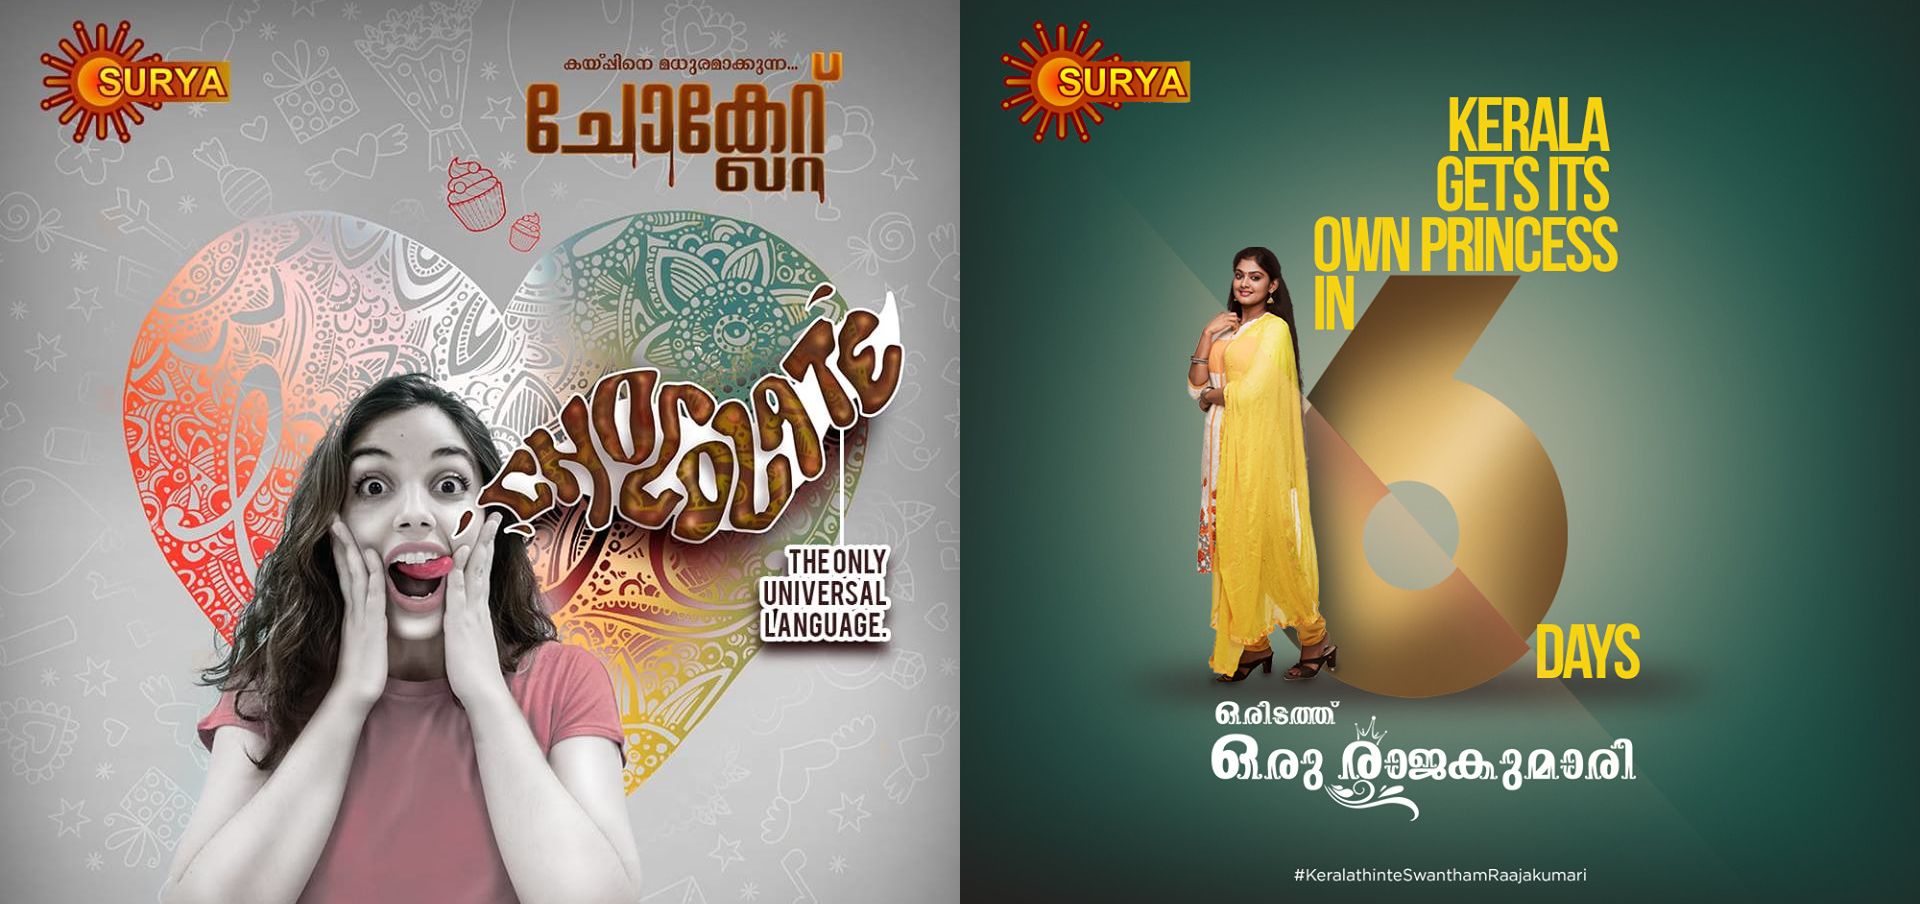 surya tv 2019 new malayalam serials